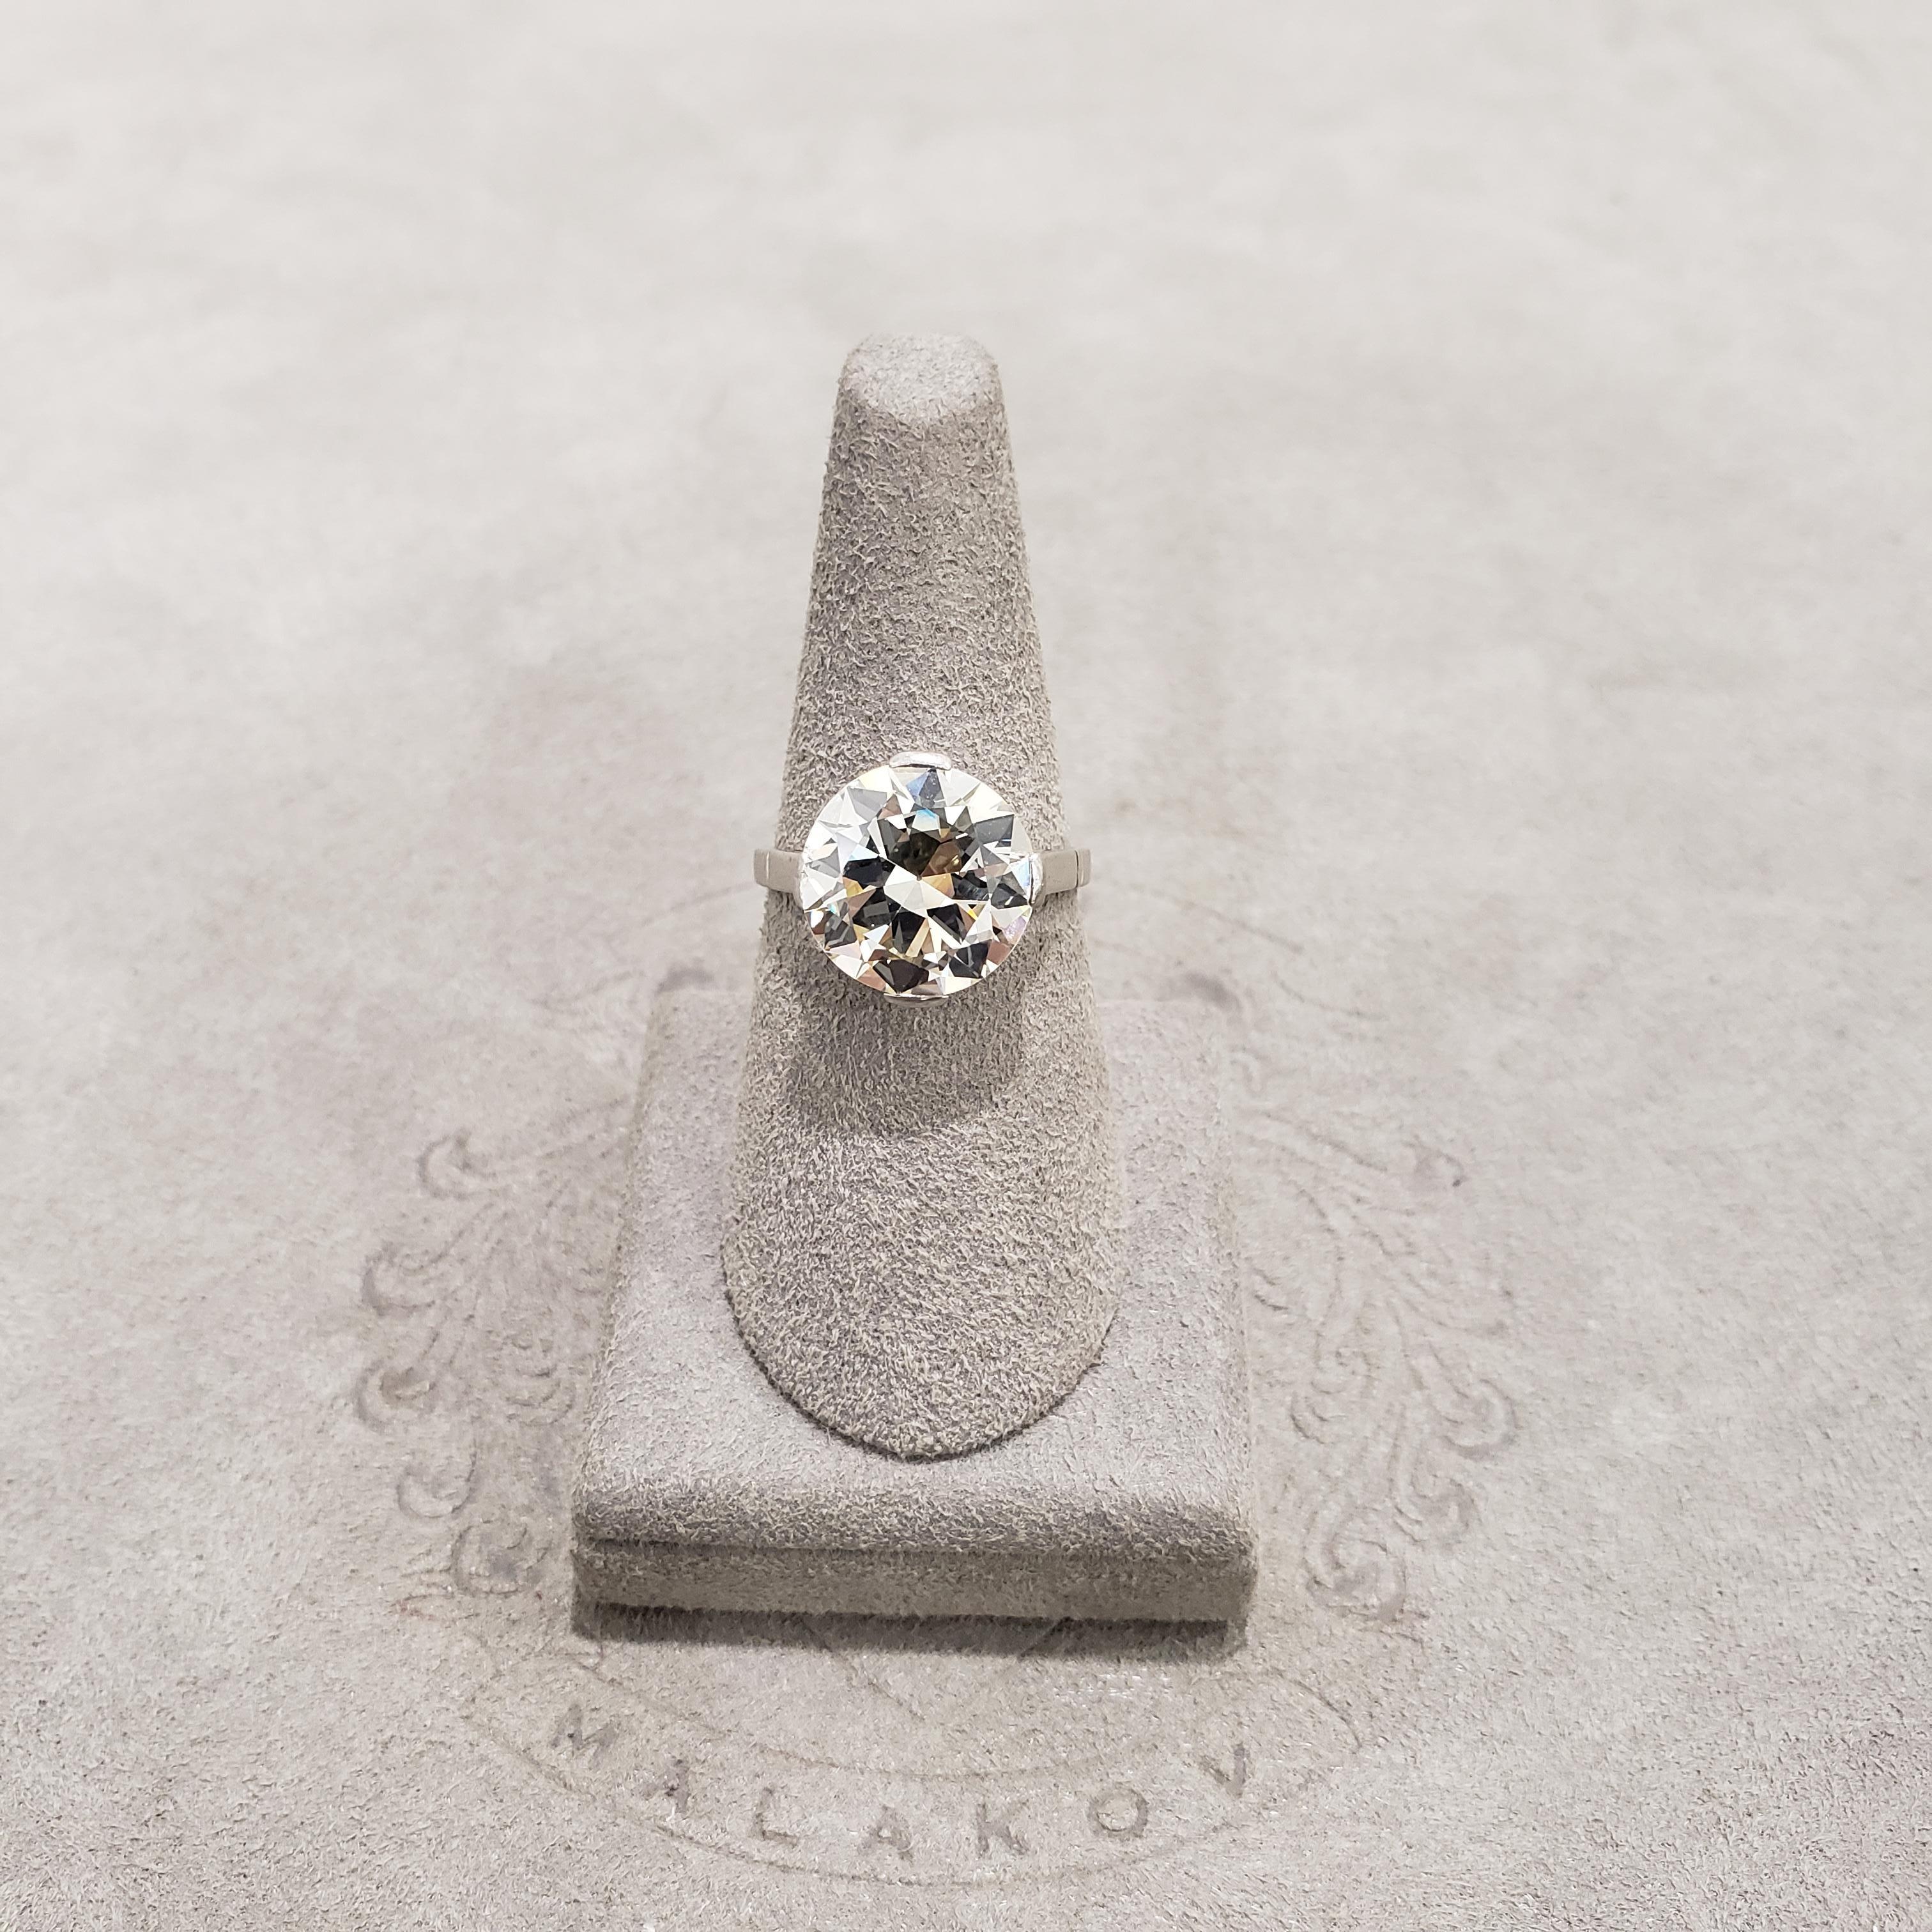 Antique 5.19 Carats Old European Cut Diamond Solitaire Engagement Ring For Sale 1